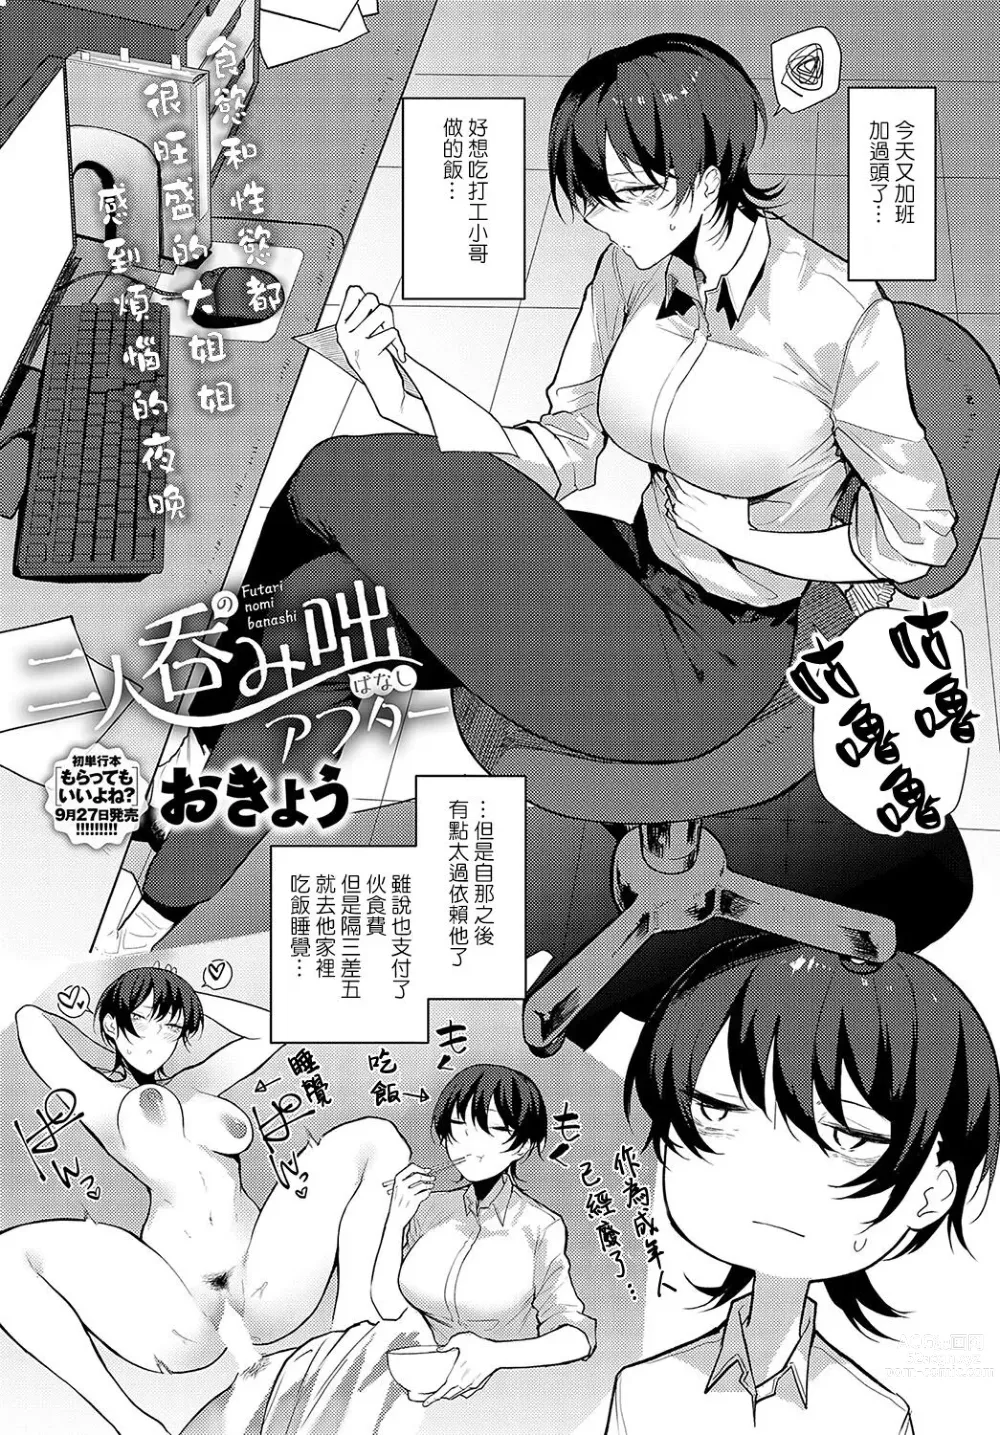 Page 1 of manga Futari nomi banashi After